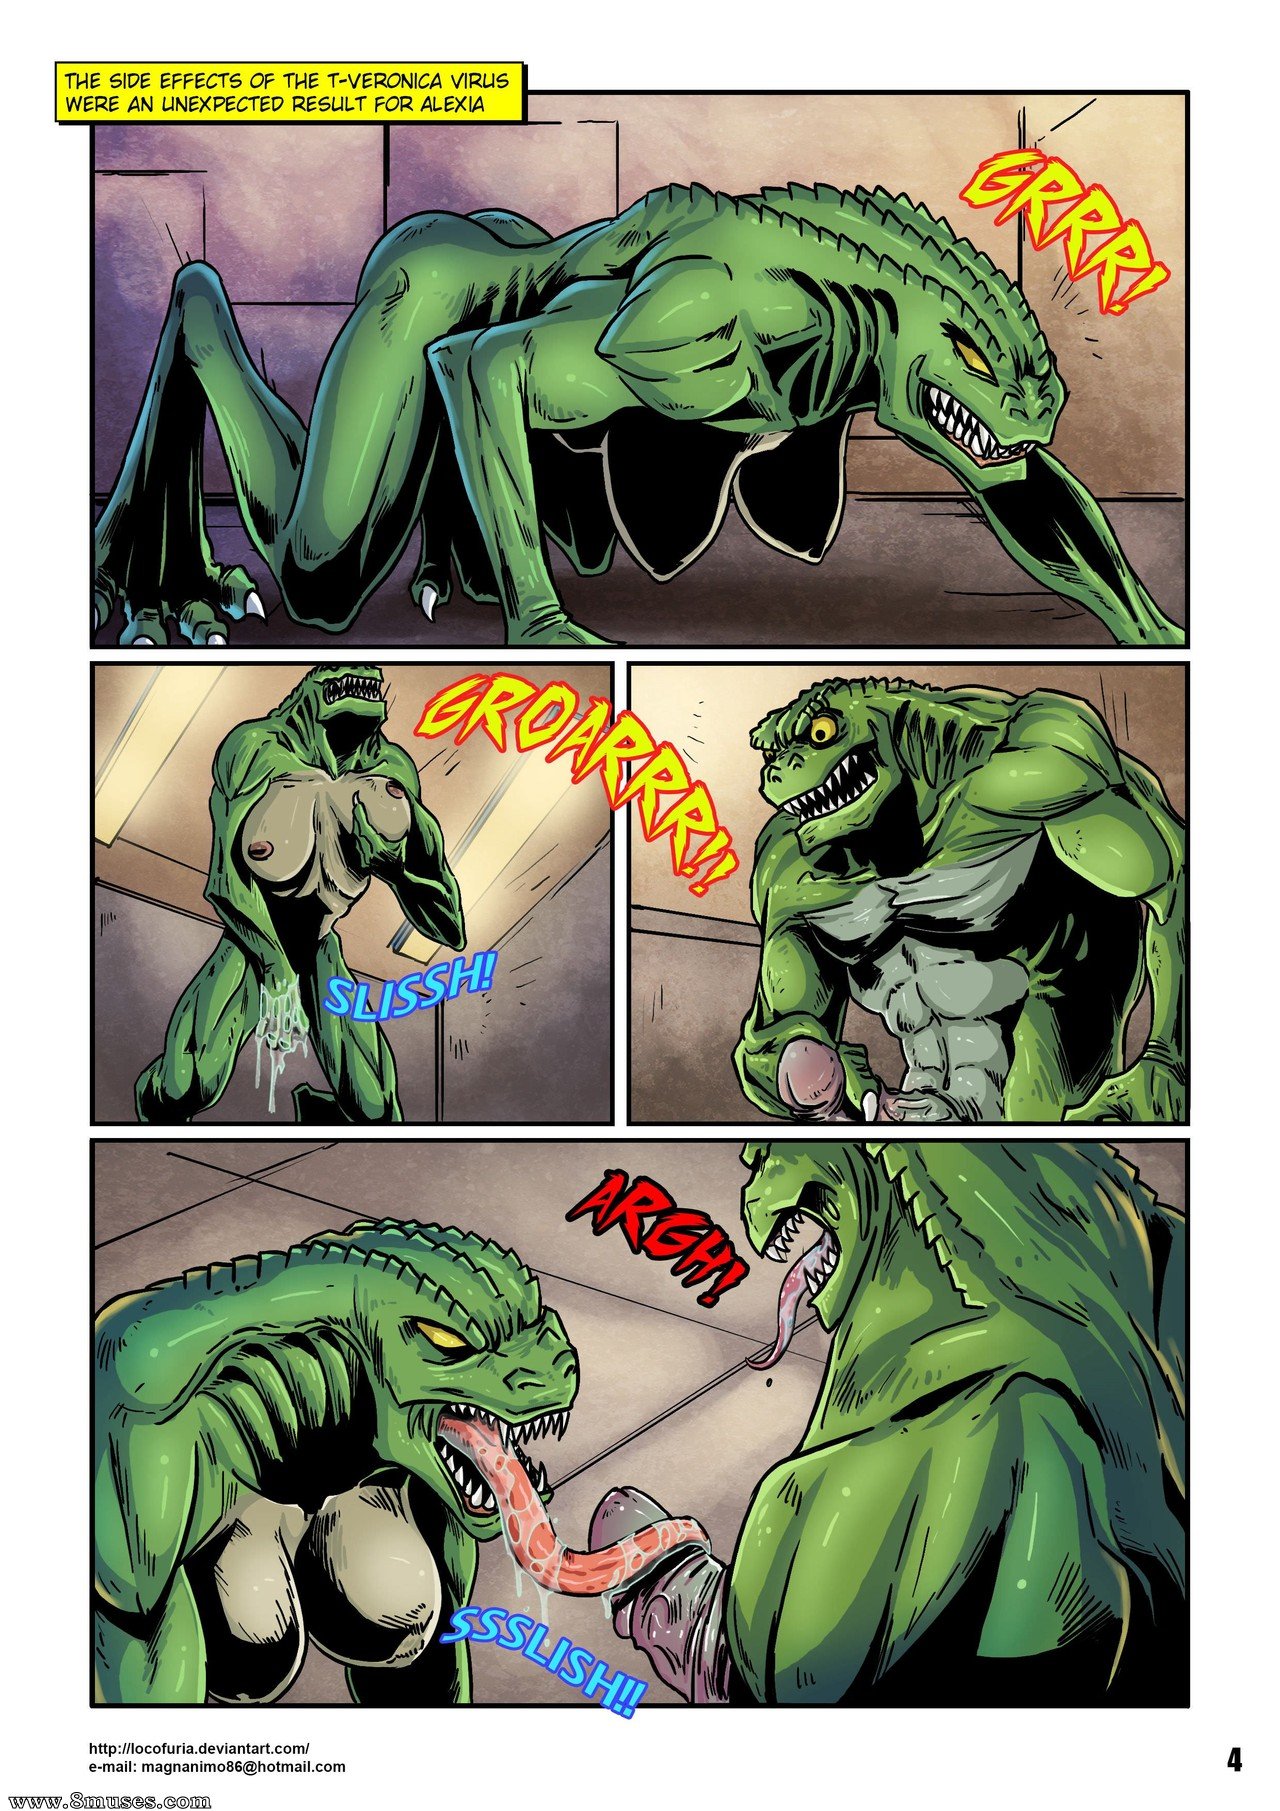 Beasteality comics